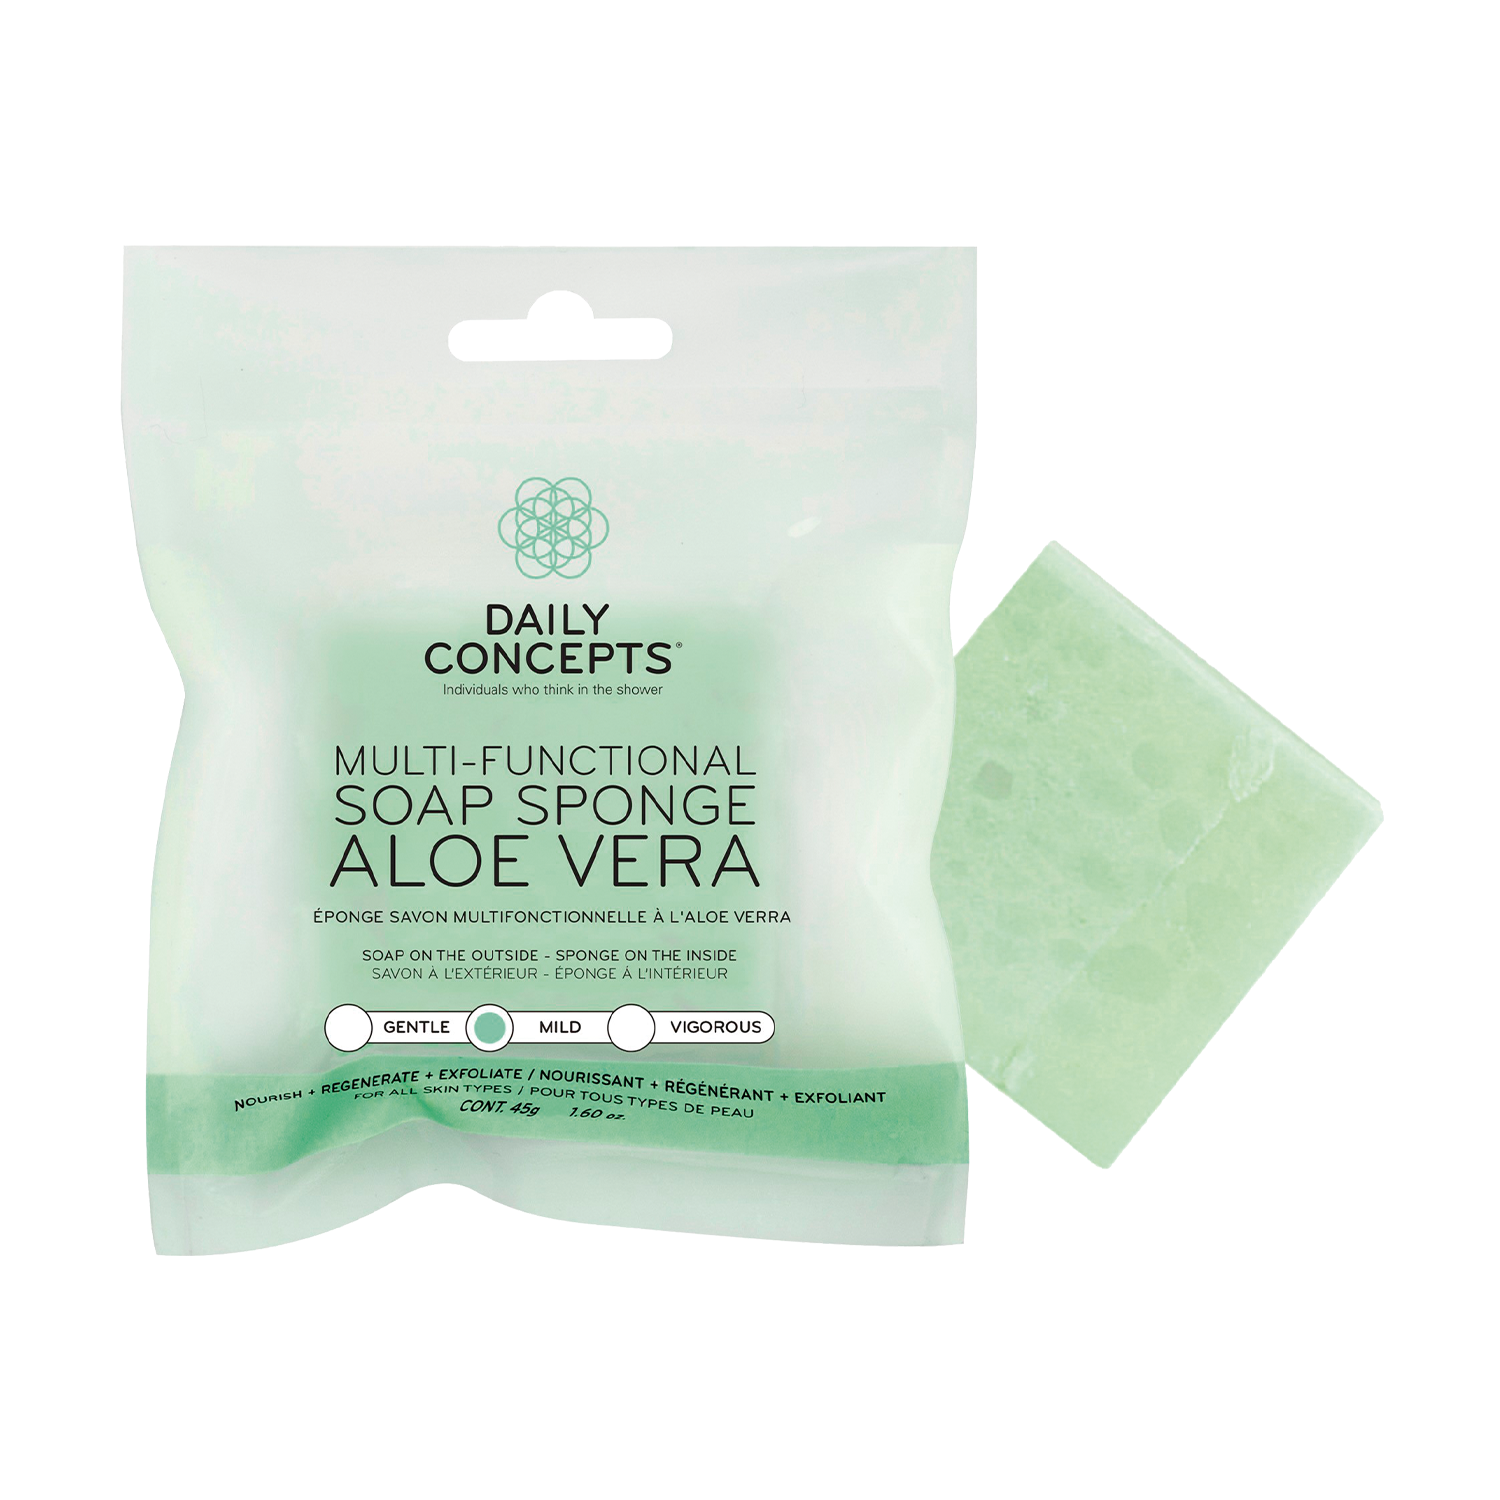 Daily Concepts Multi-Functional Soap Sponge Aloe Vera